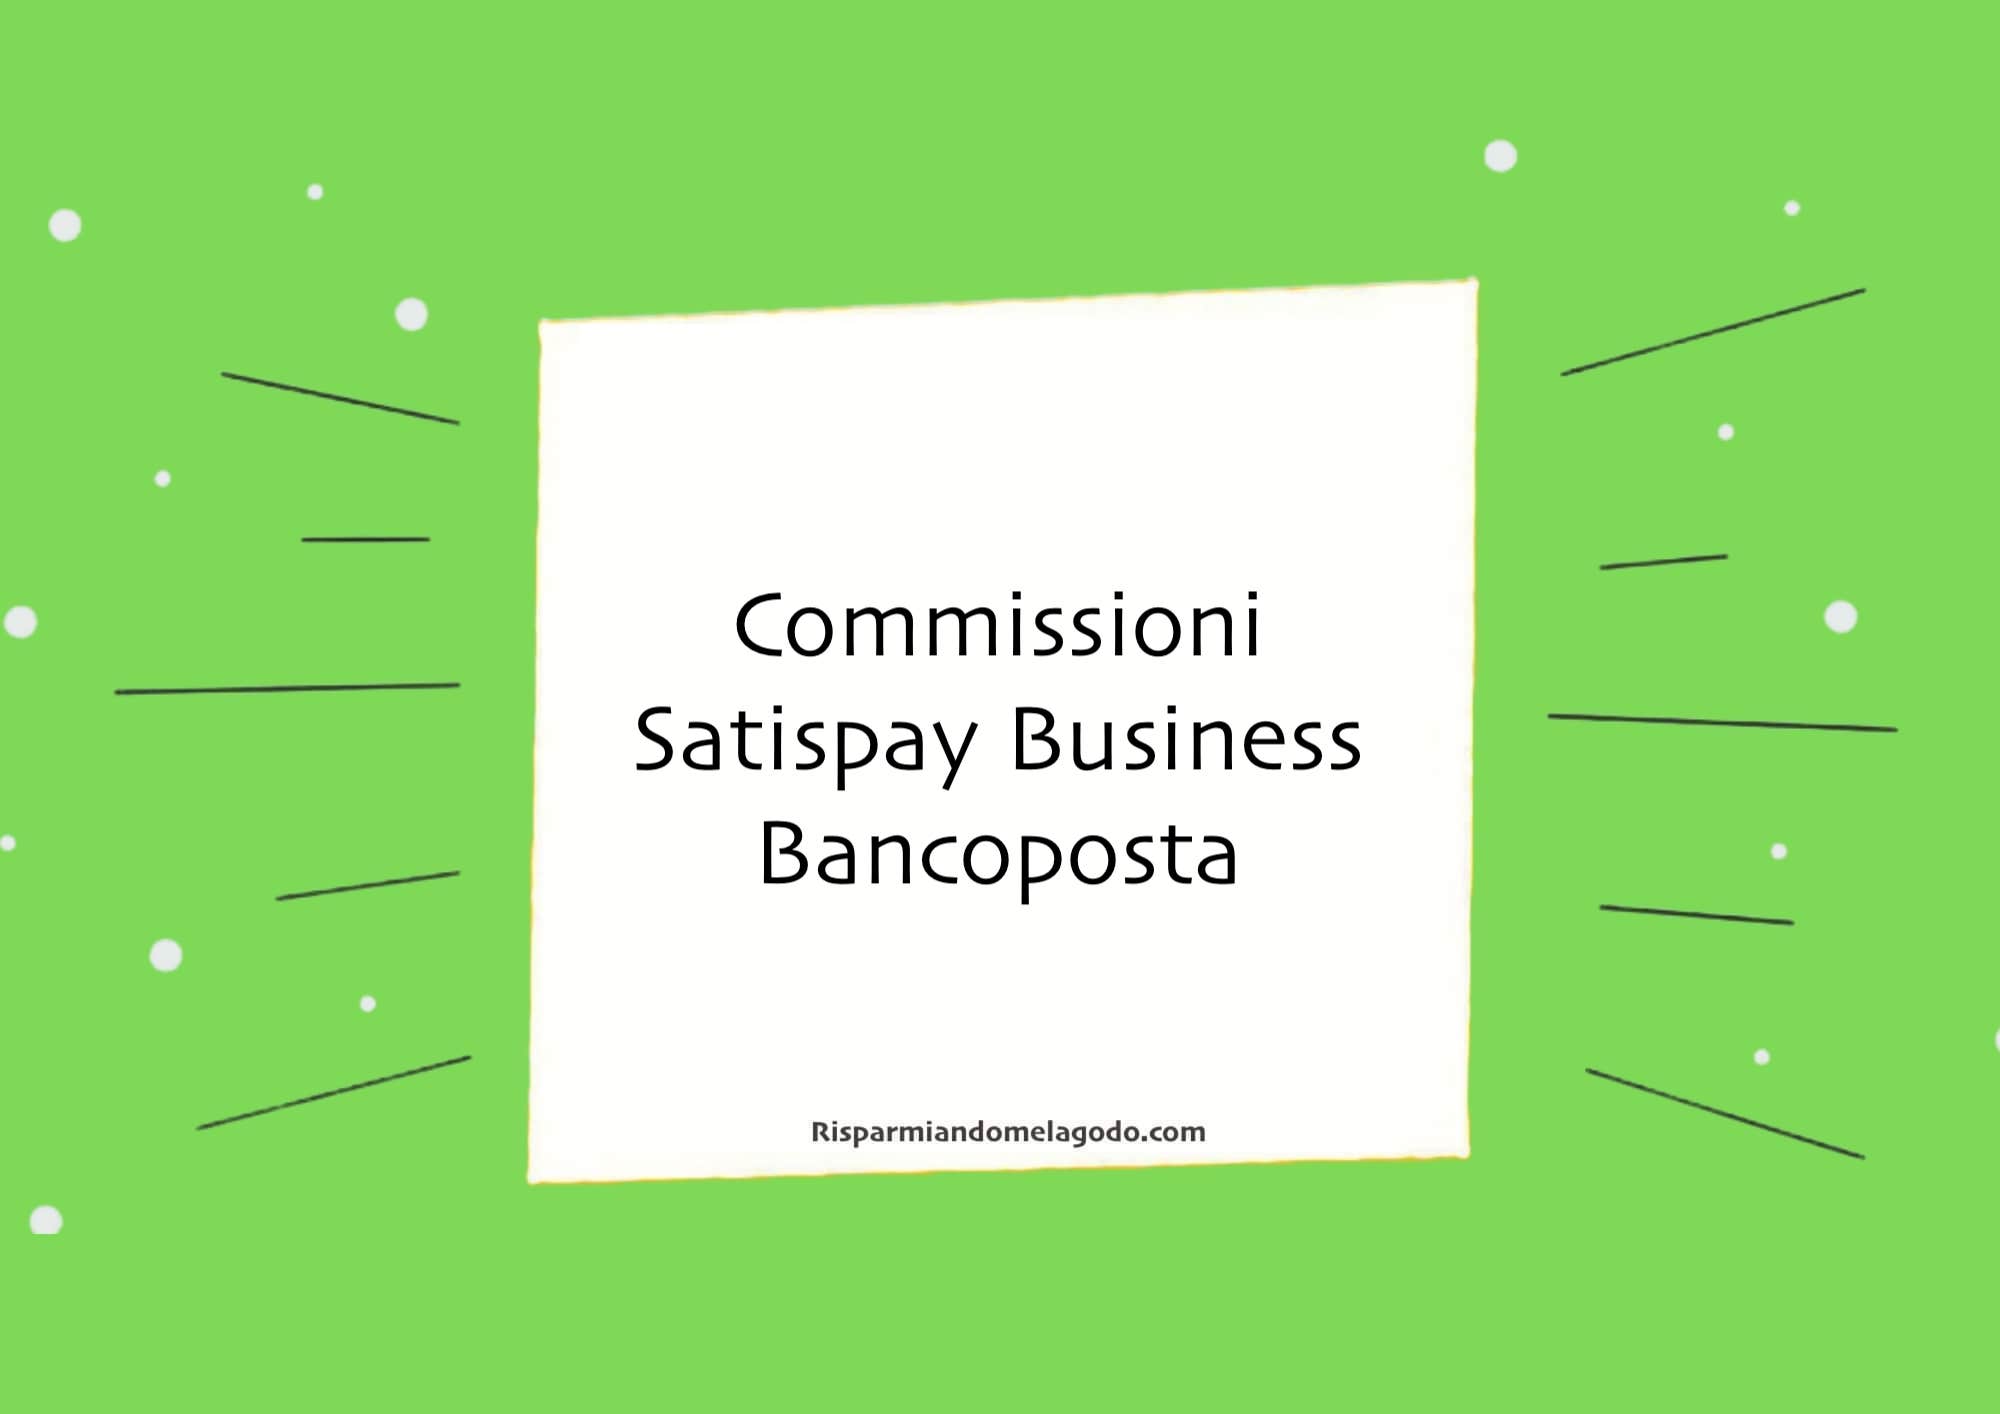 Commissioni Satispay Business Bancoposta